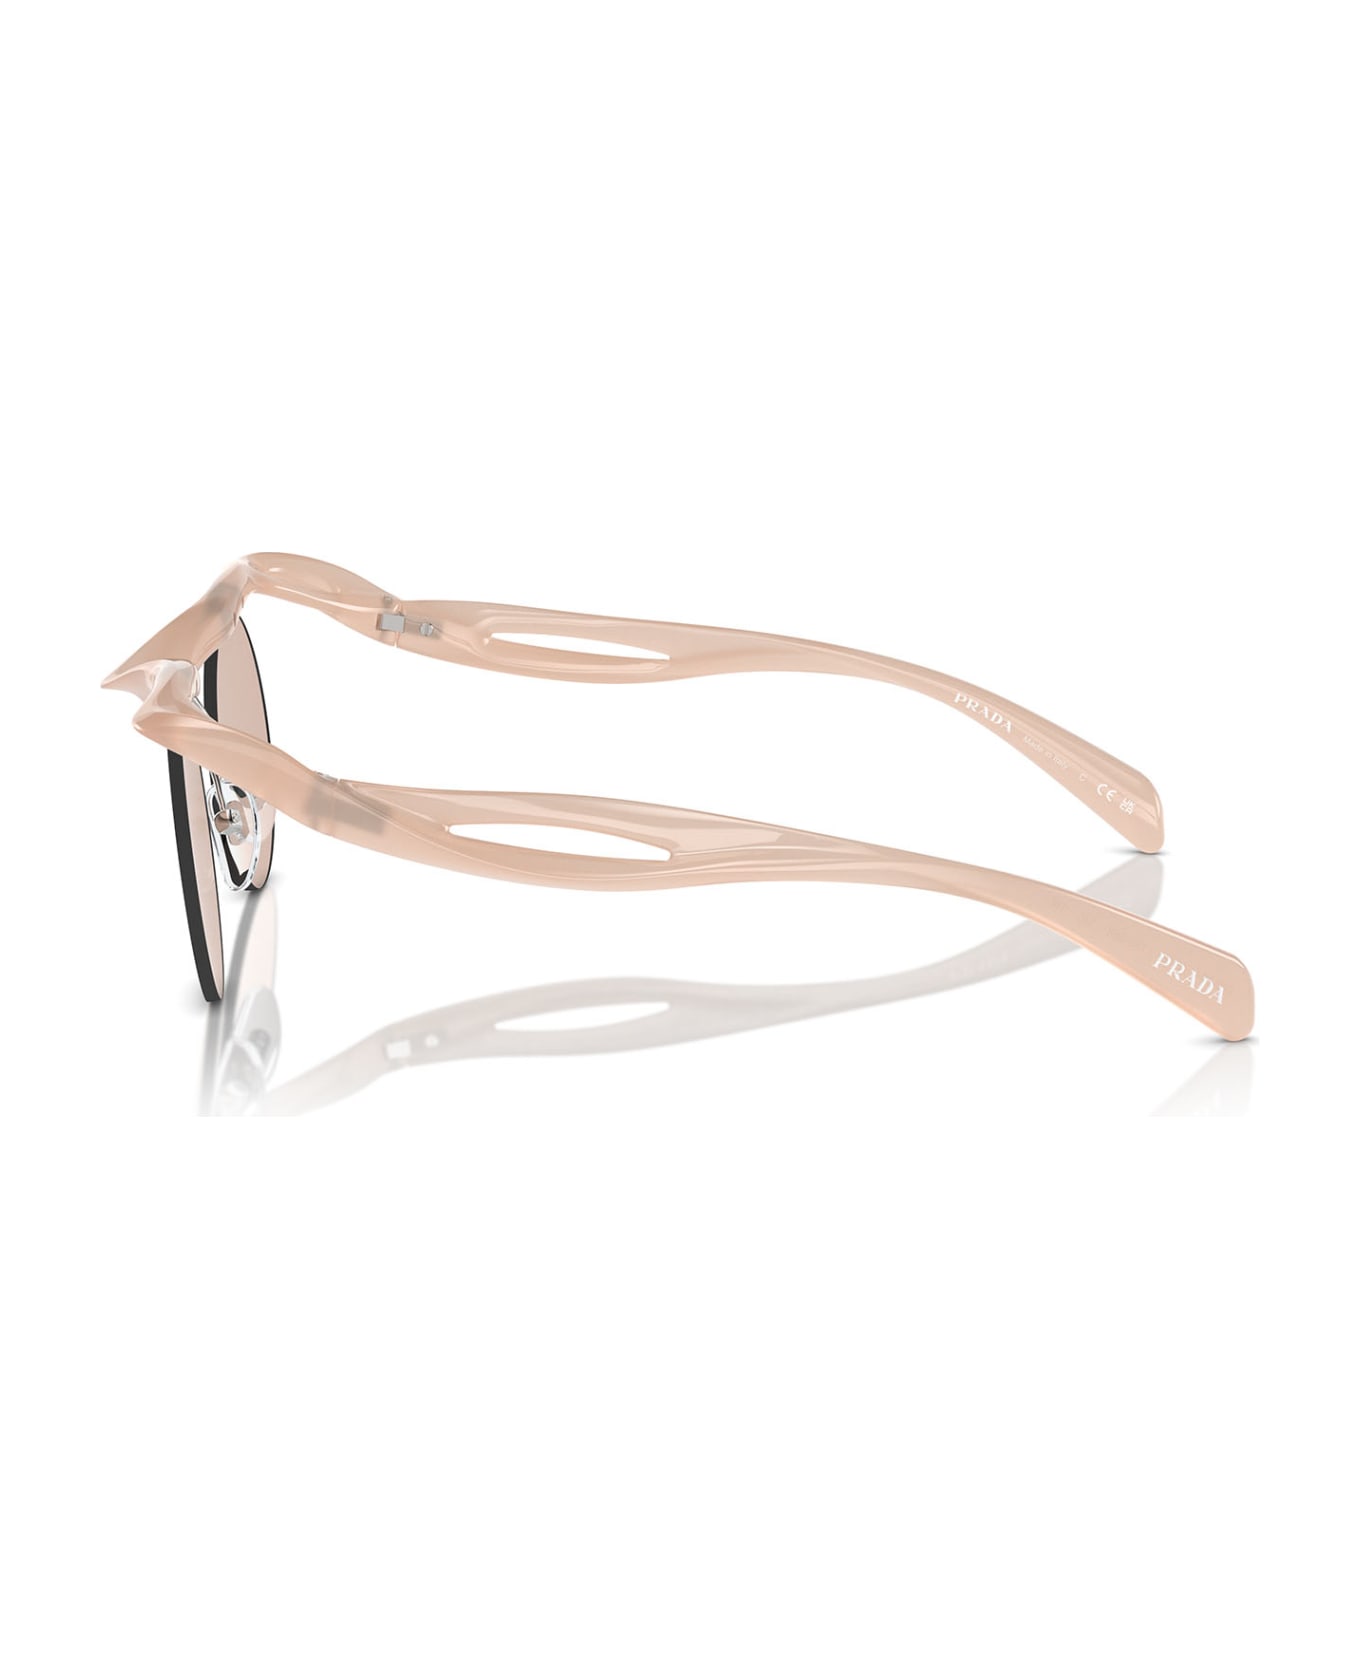 Prada Eyewear Pr A24s Opal Peach Sunglasses - Opal Peach サングラス